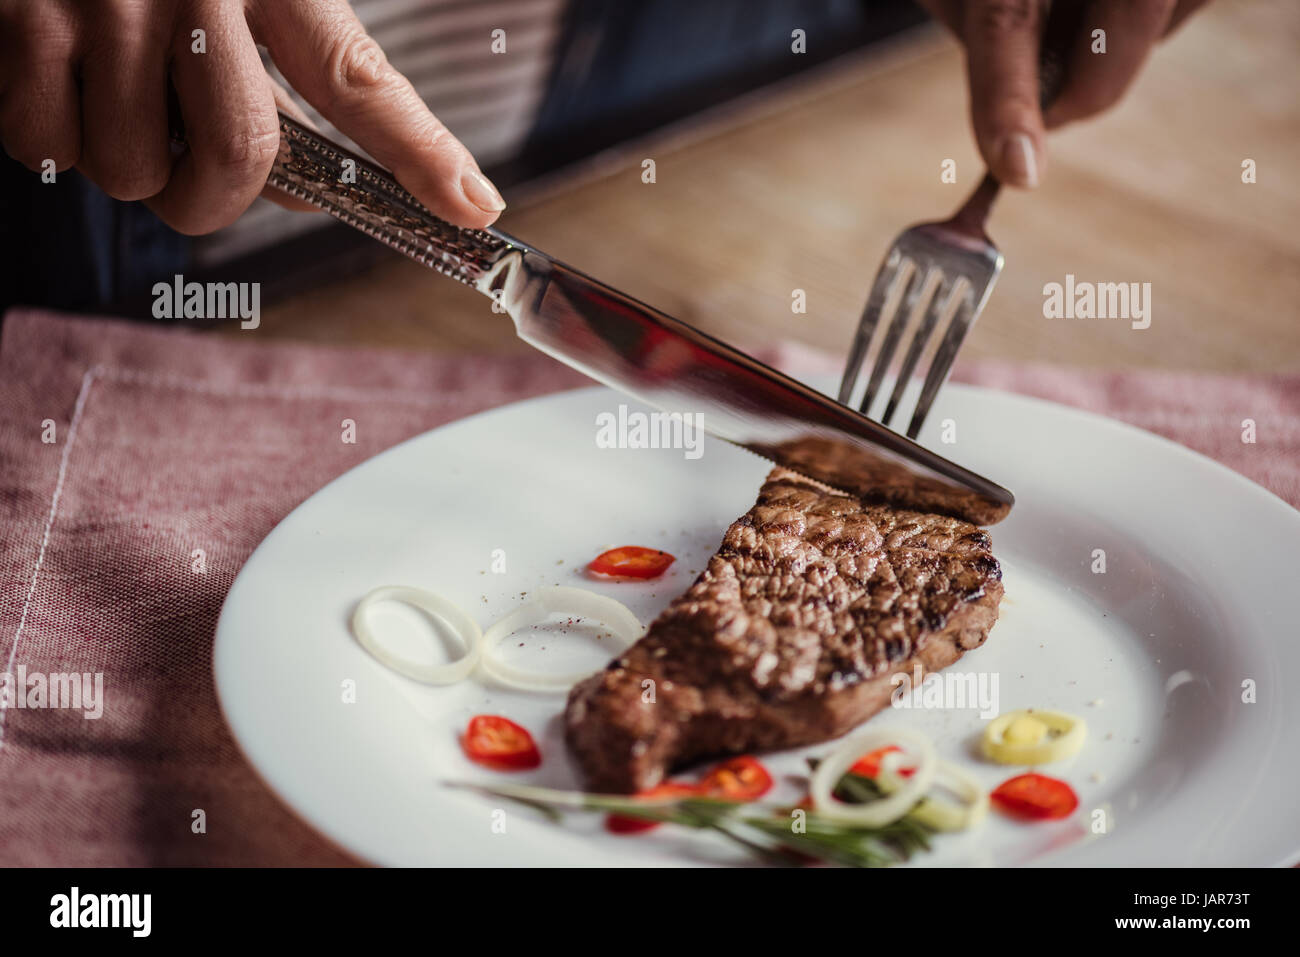 https://c8.alamy.com/comp/JAR73T/woman-eating-steak-JAR73T.jpg